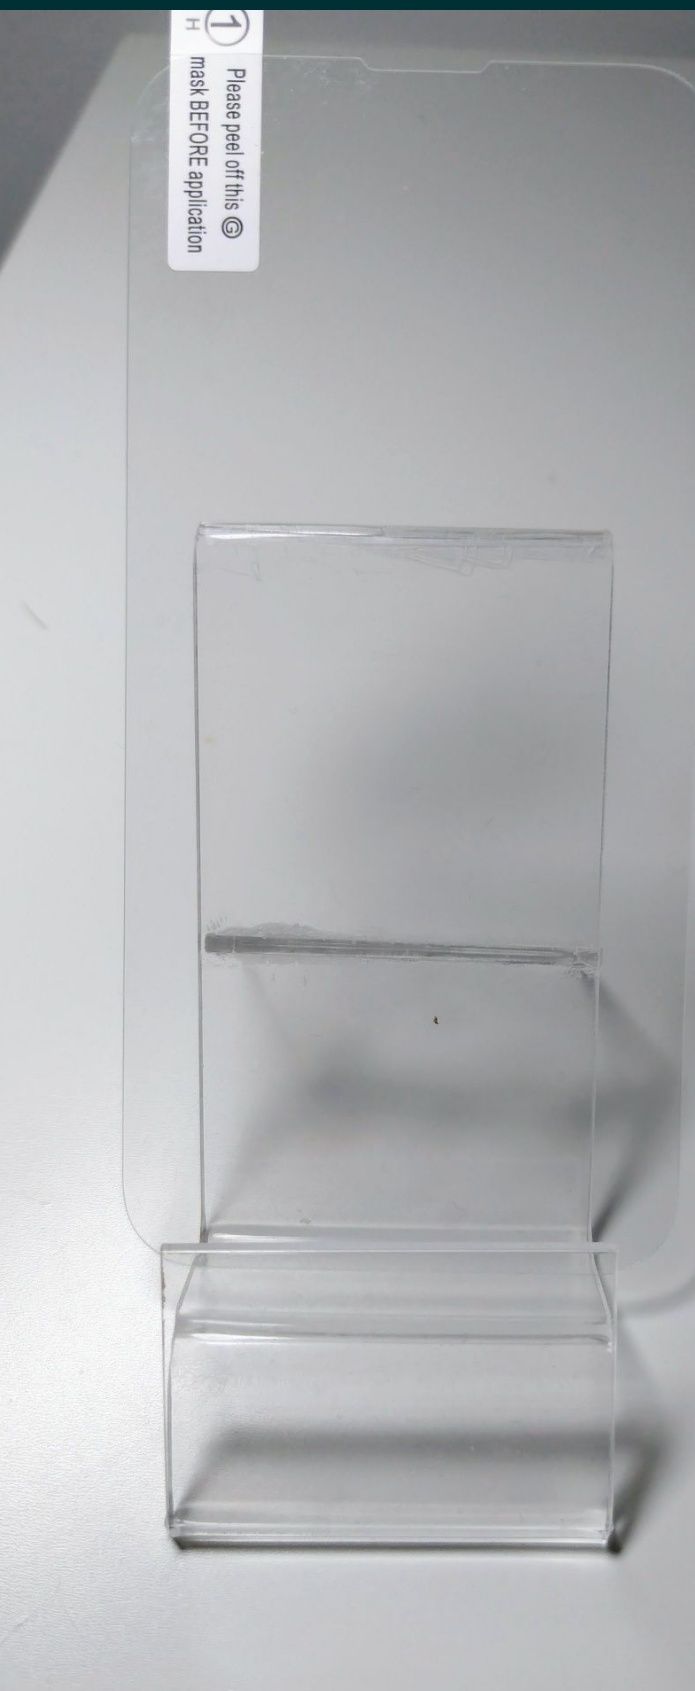 Szkło hartowane do iPhone 13 mini